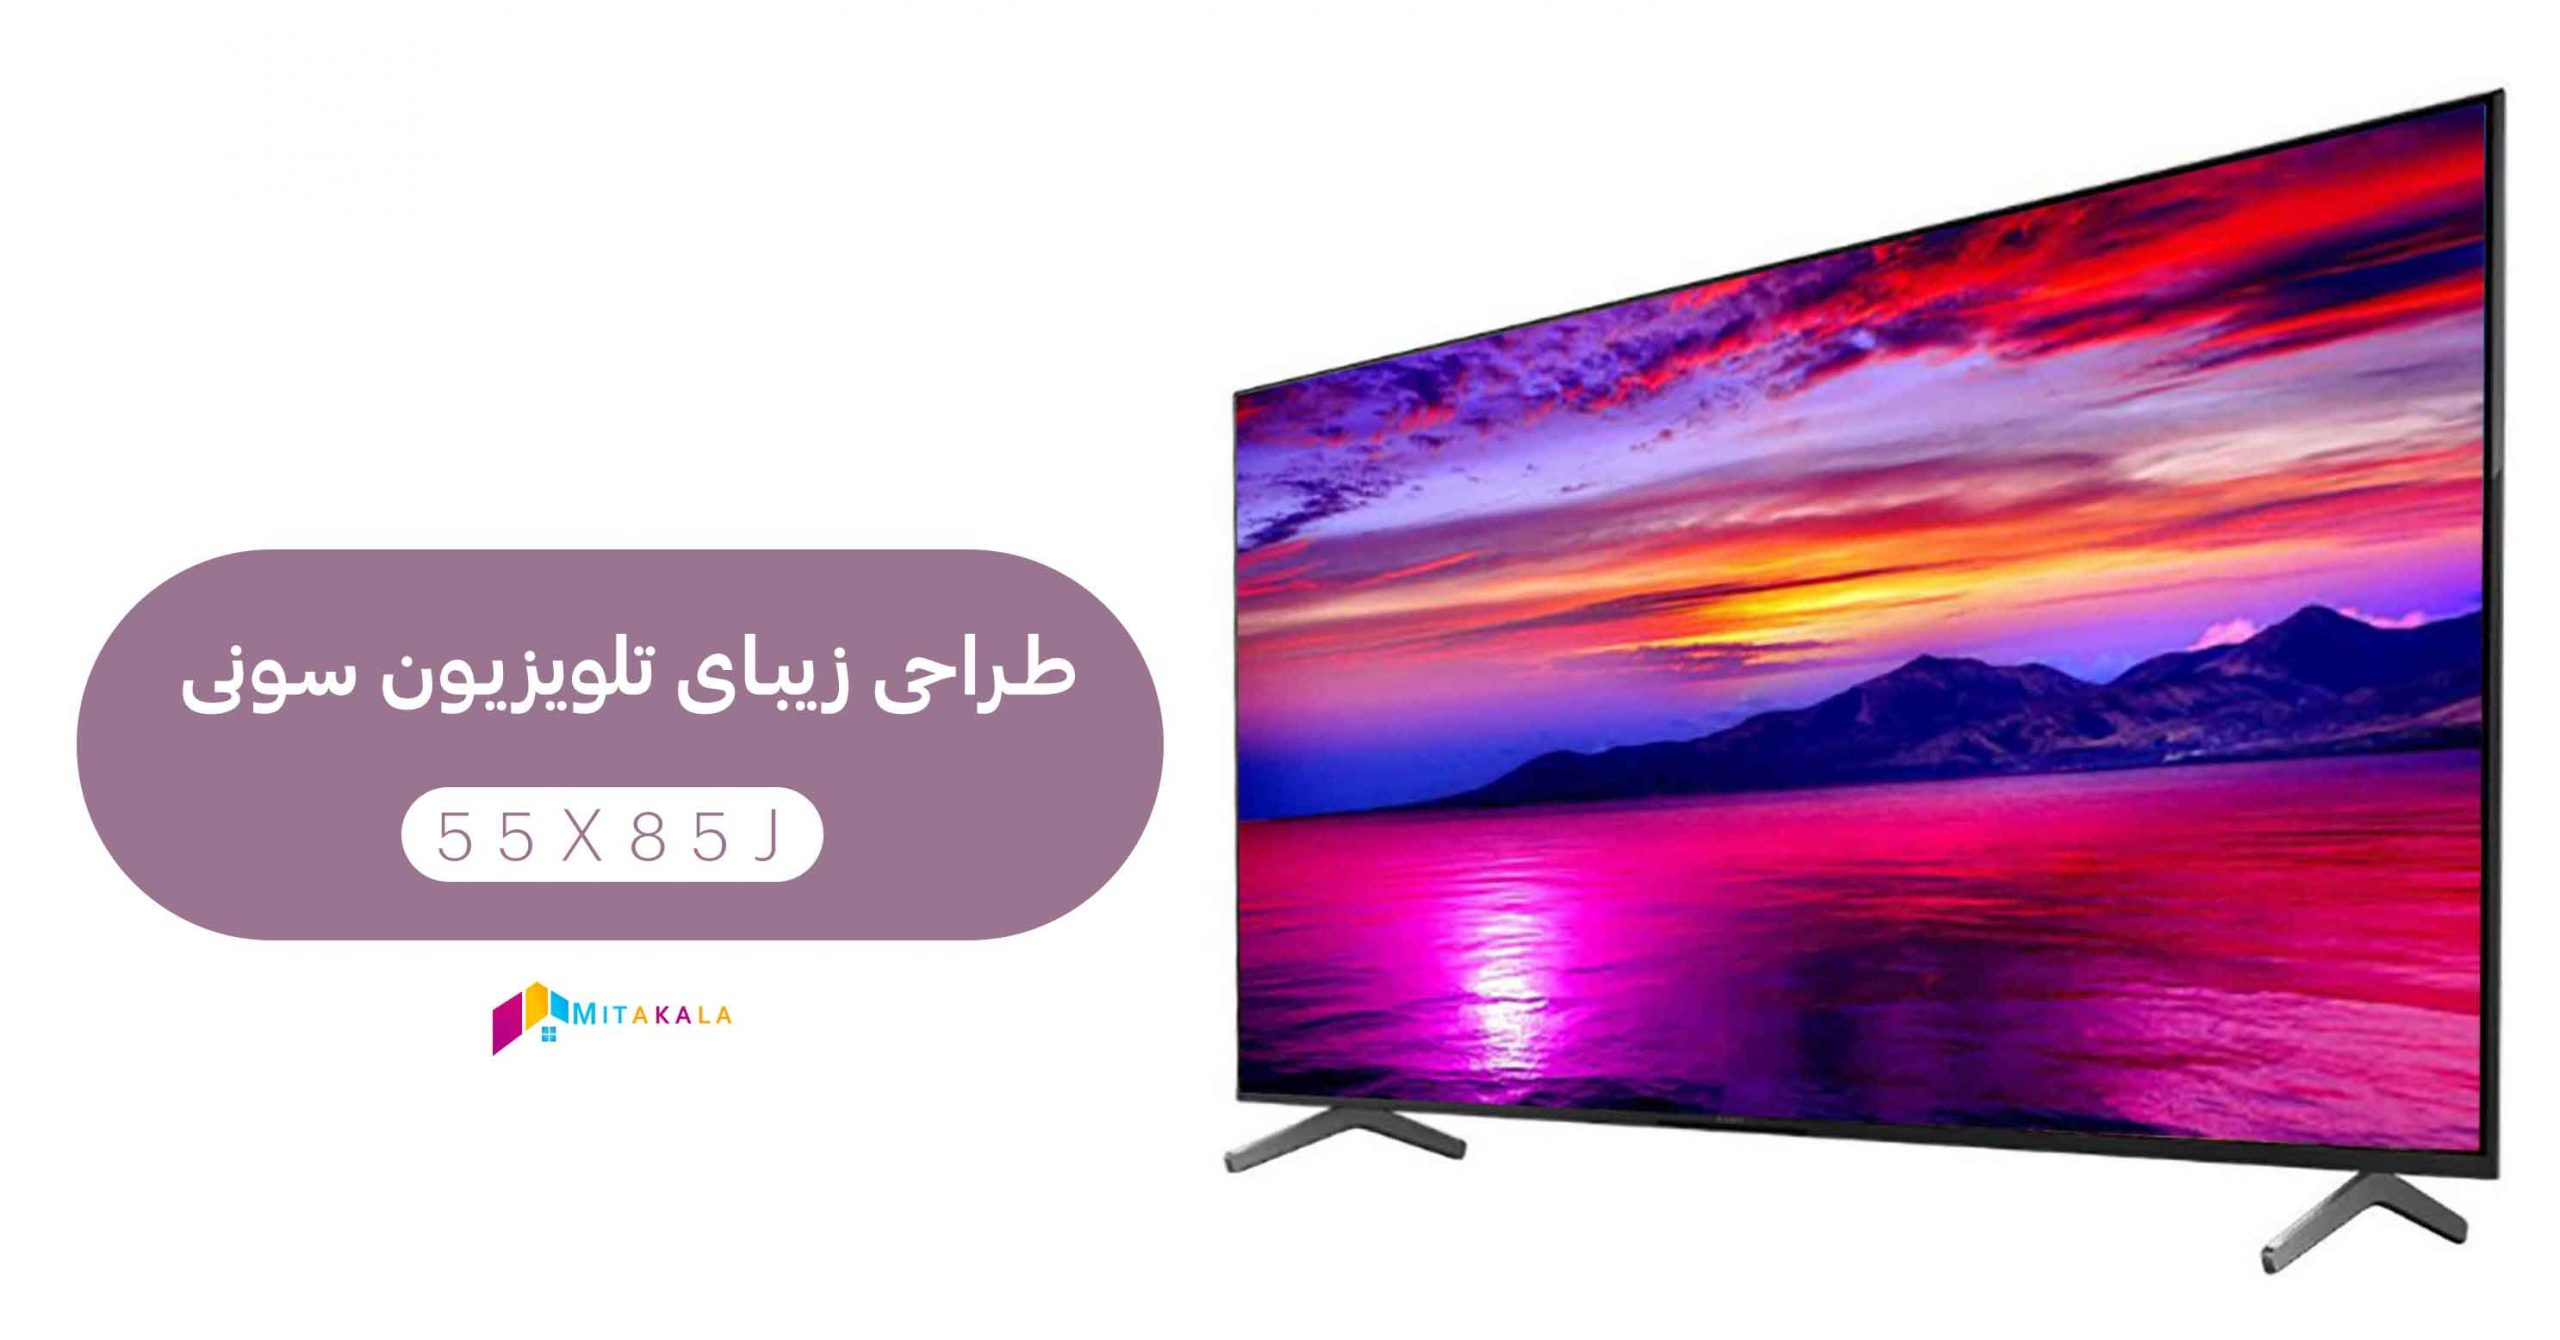 قیمت تلویزیون سونی 55x85j